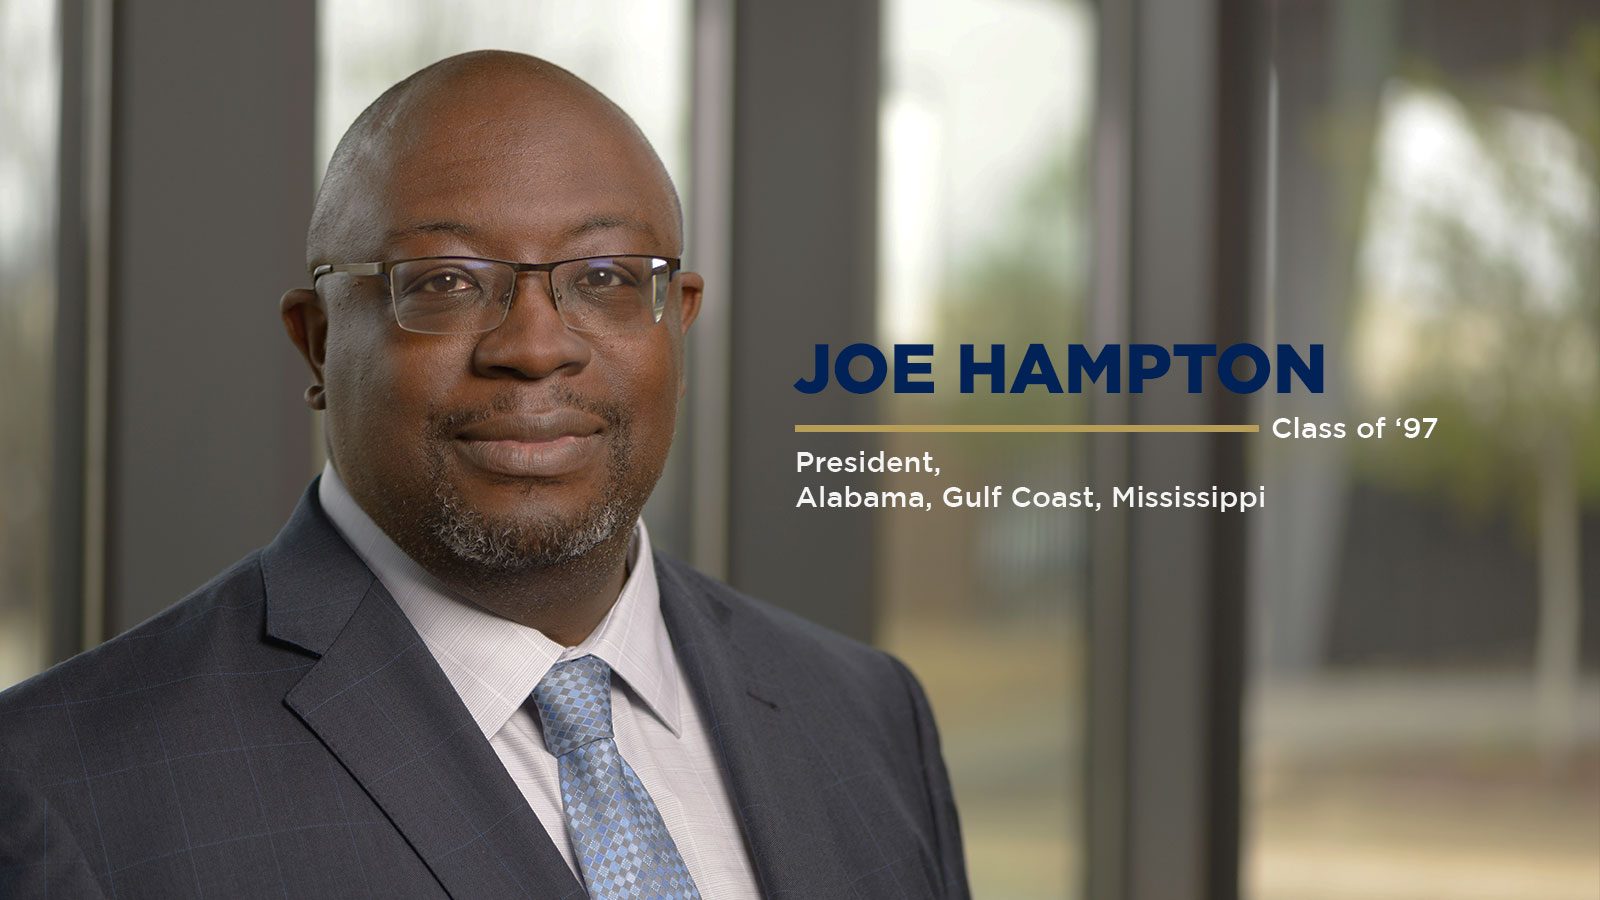 Joe Hampton - President, Alabama, Gulf Coast, Mississippi